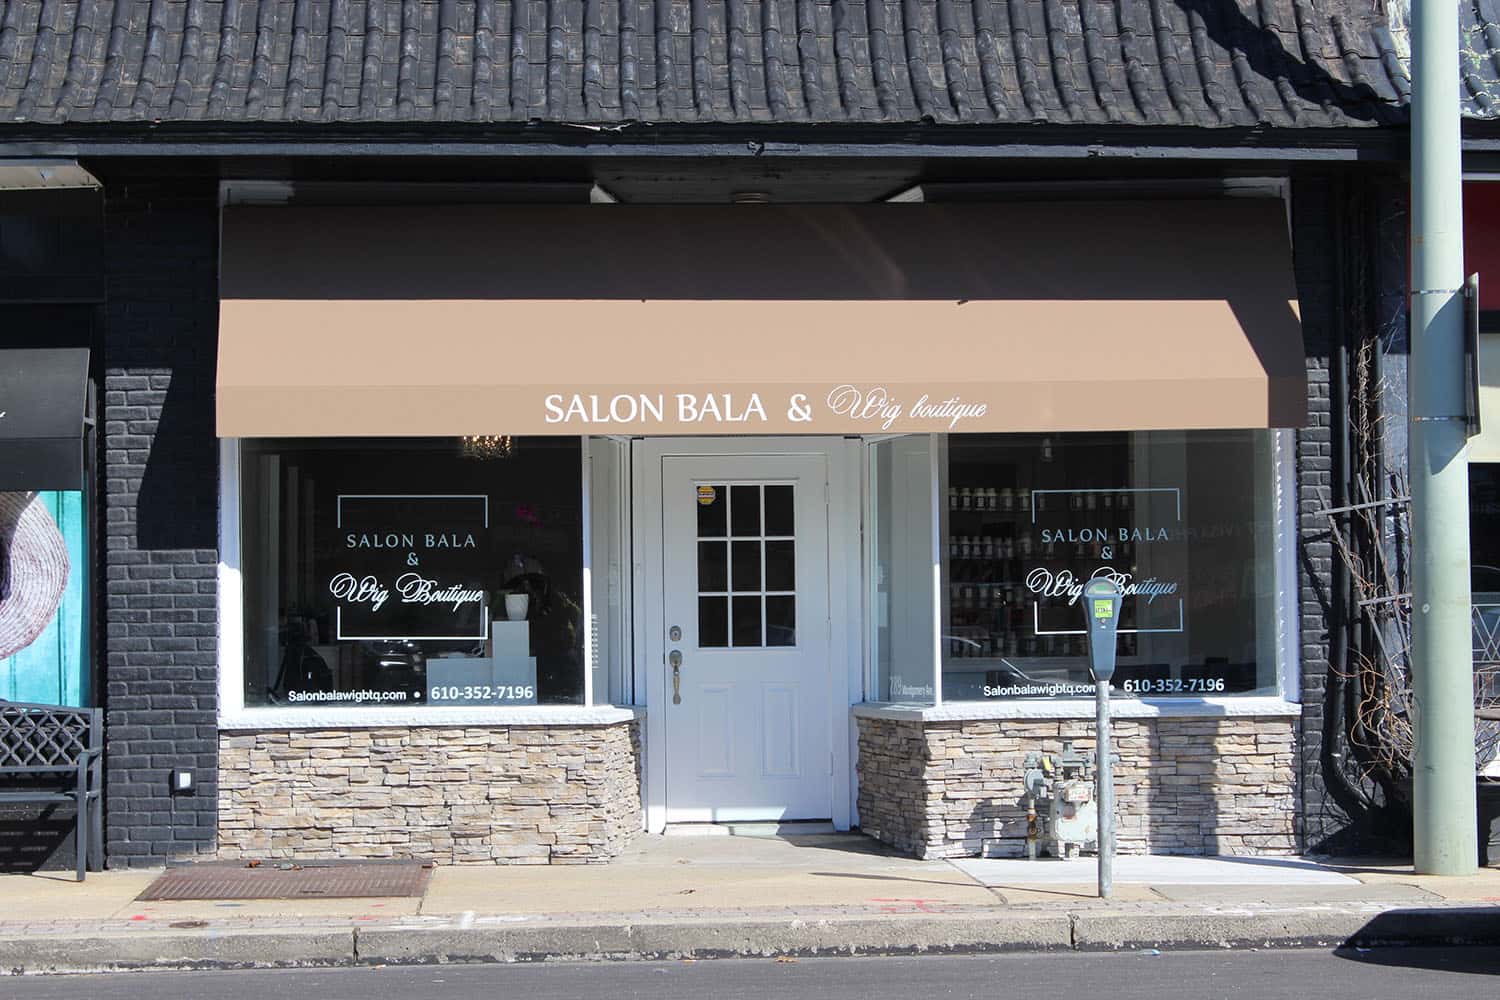 Decoration design of Salon Bala & Wig Boutique storefront.